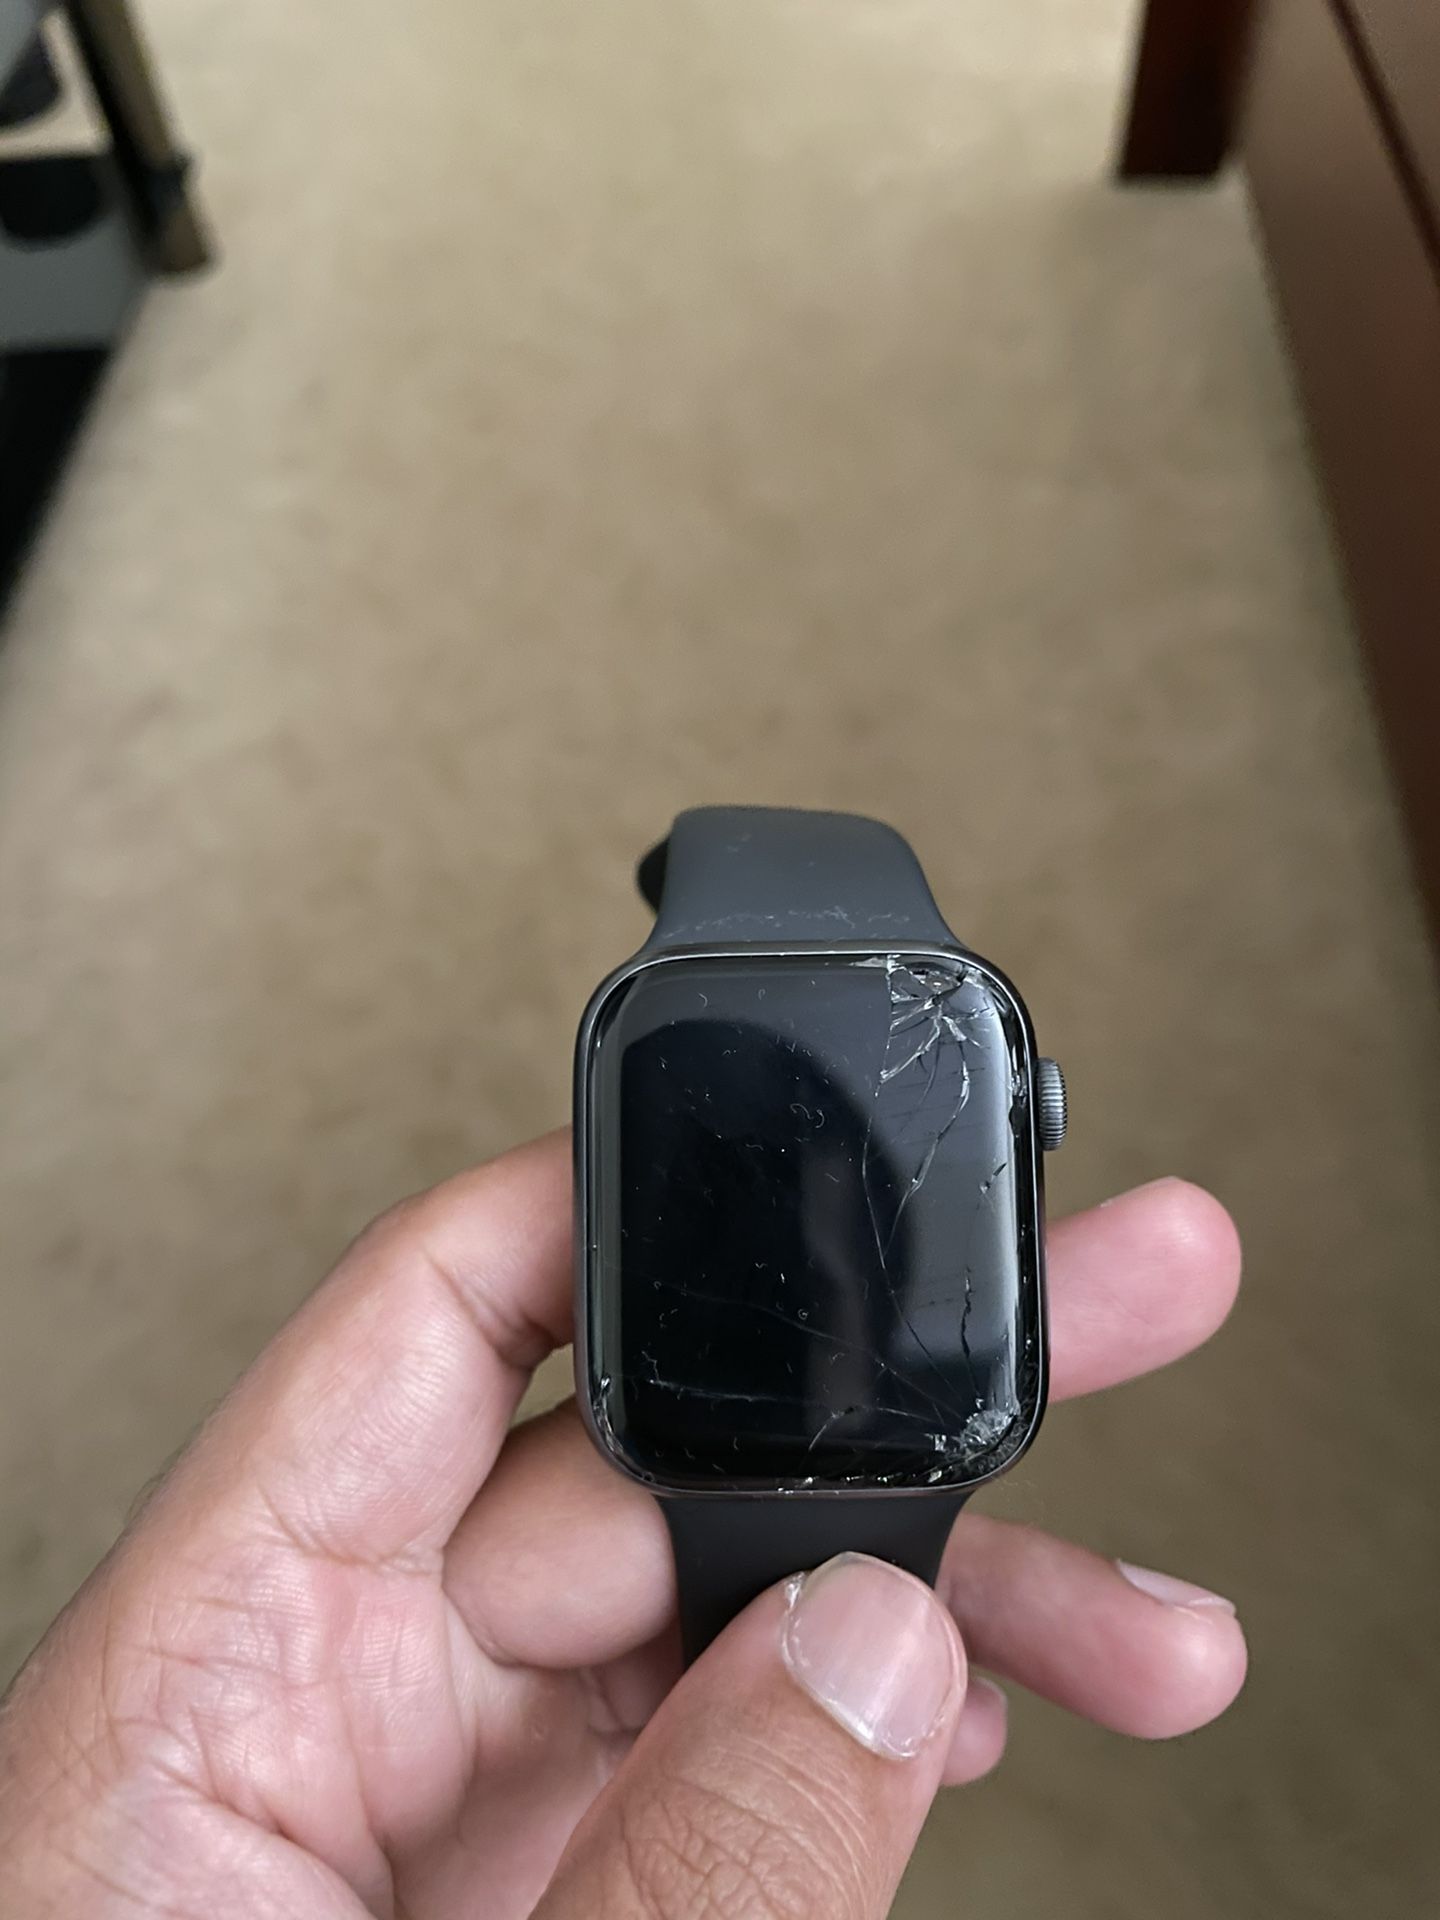 Apple Watch series 4 (cracked)